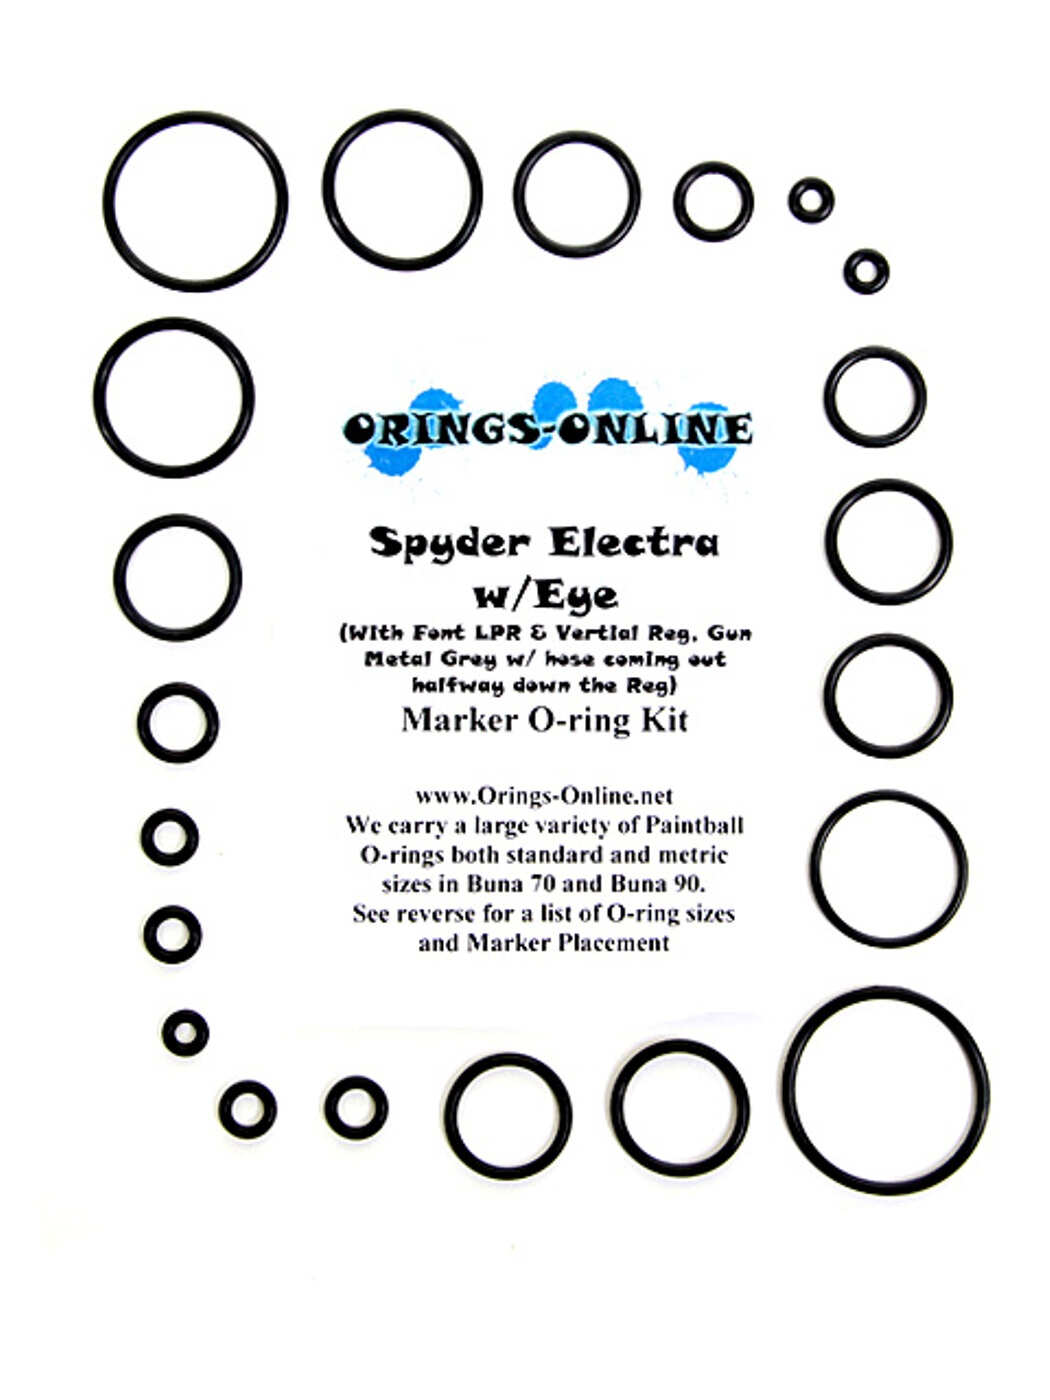 Spyder Electra w/ Eye O-ring Kit